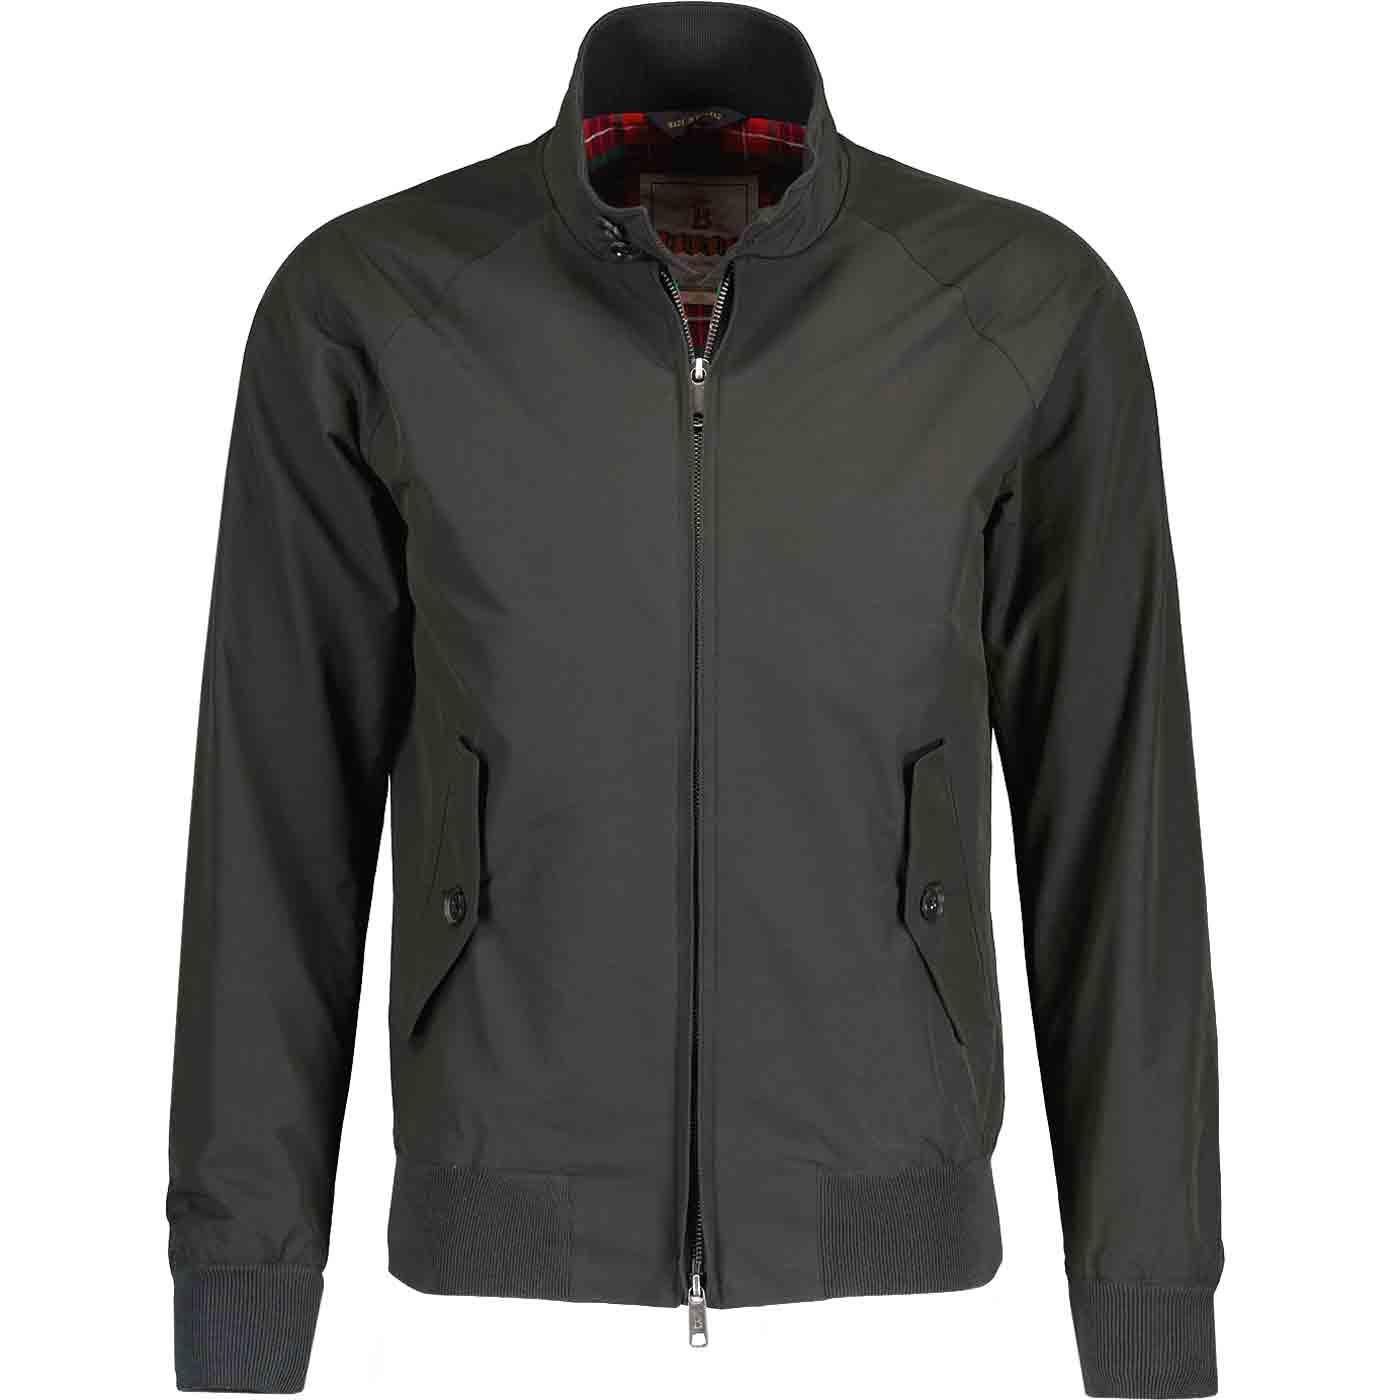 Men's Classic Harrington Jacket Black Size: XX-Large MERC London Retro Mod